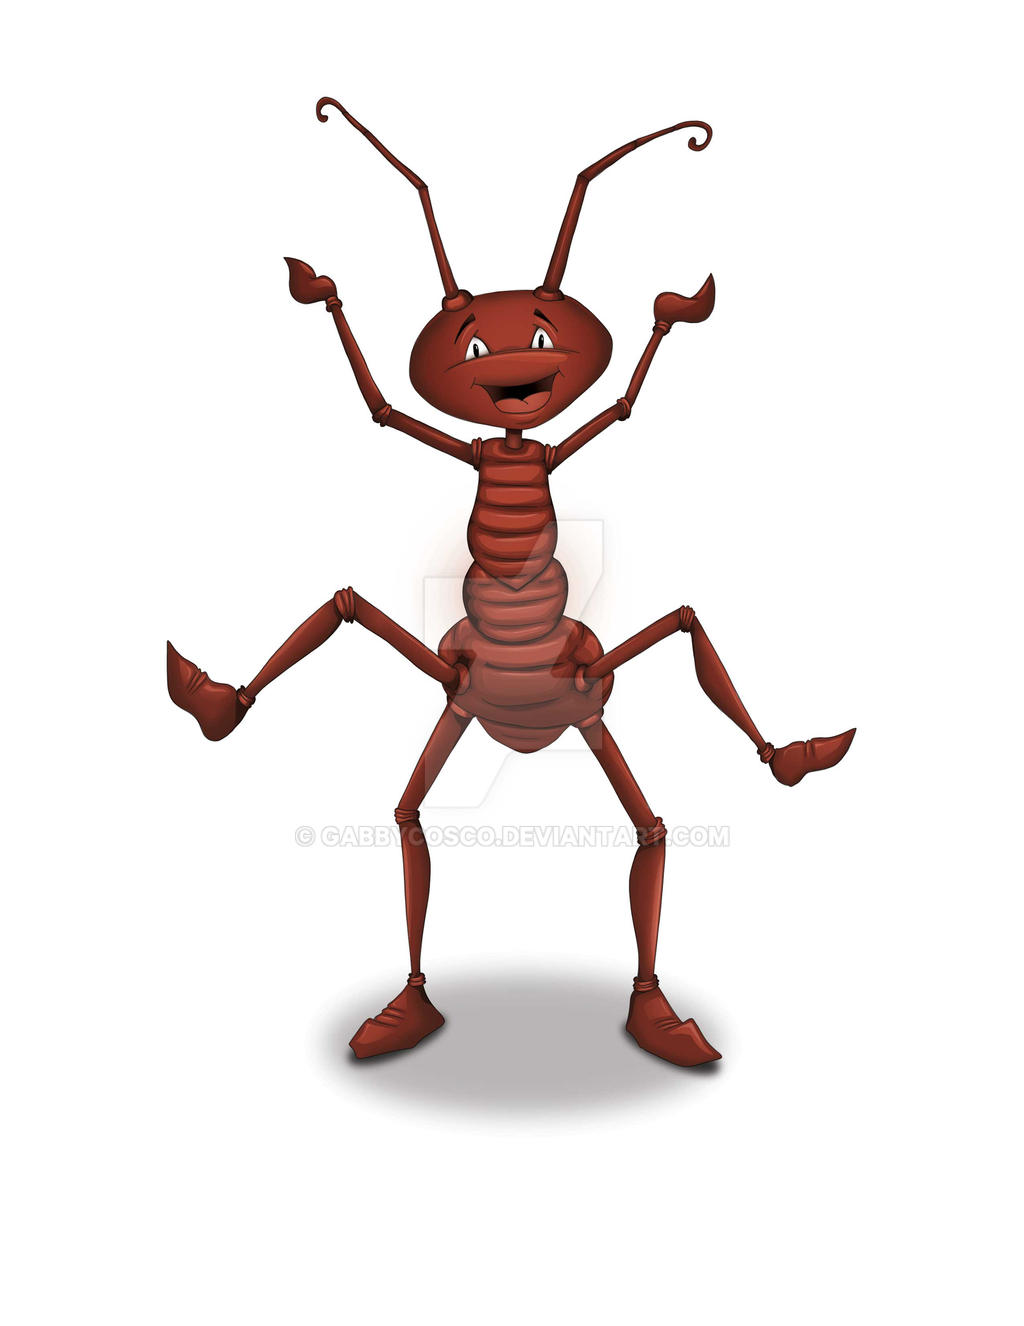 I am Ant - I have 6 legs by gabbycosco on DeviantArt